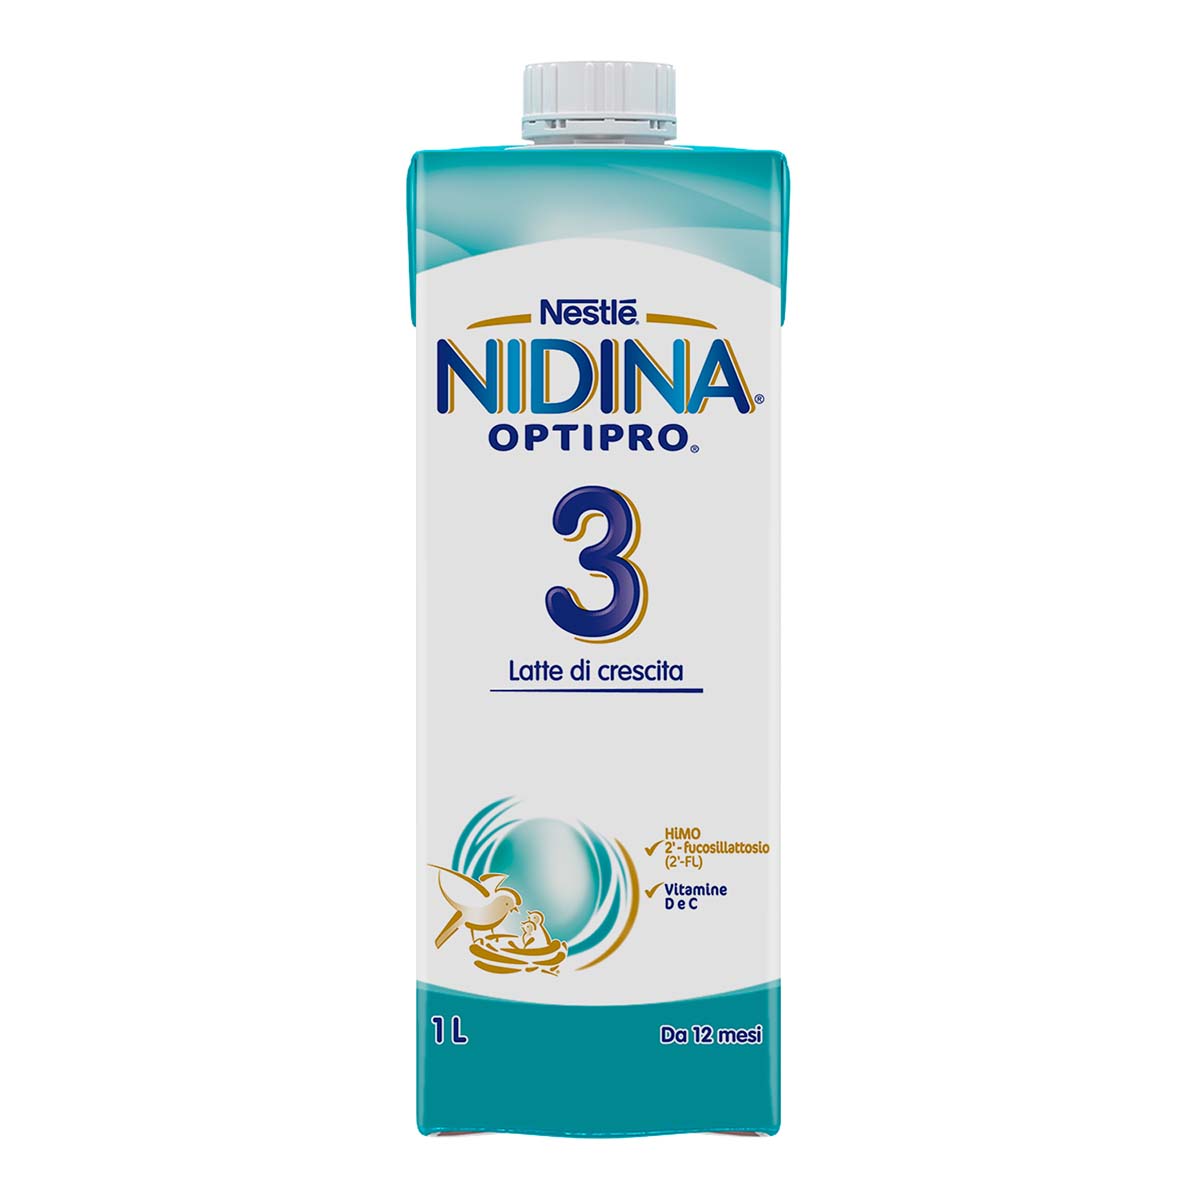 Nestlé NIDINA OPTIPRO 3 1L, Latte di crescita liquido, dai 12 mesi